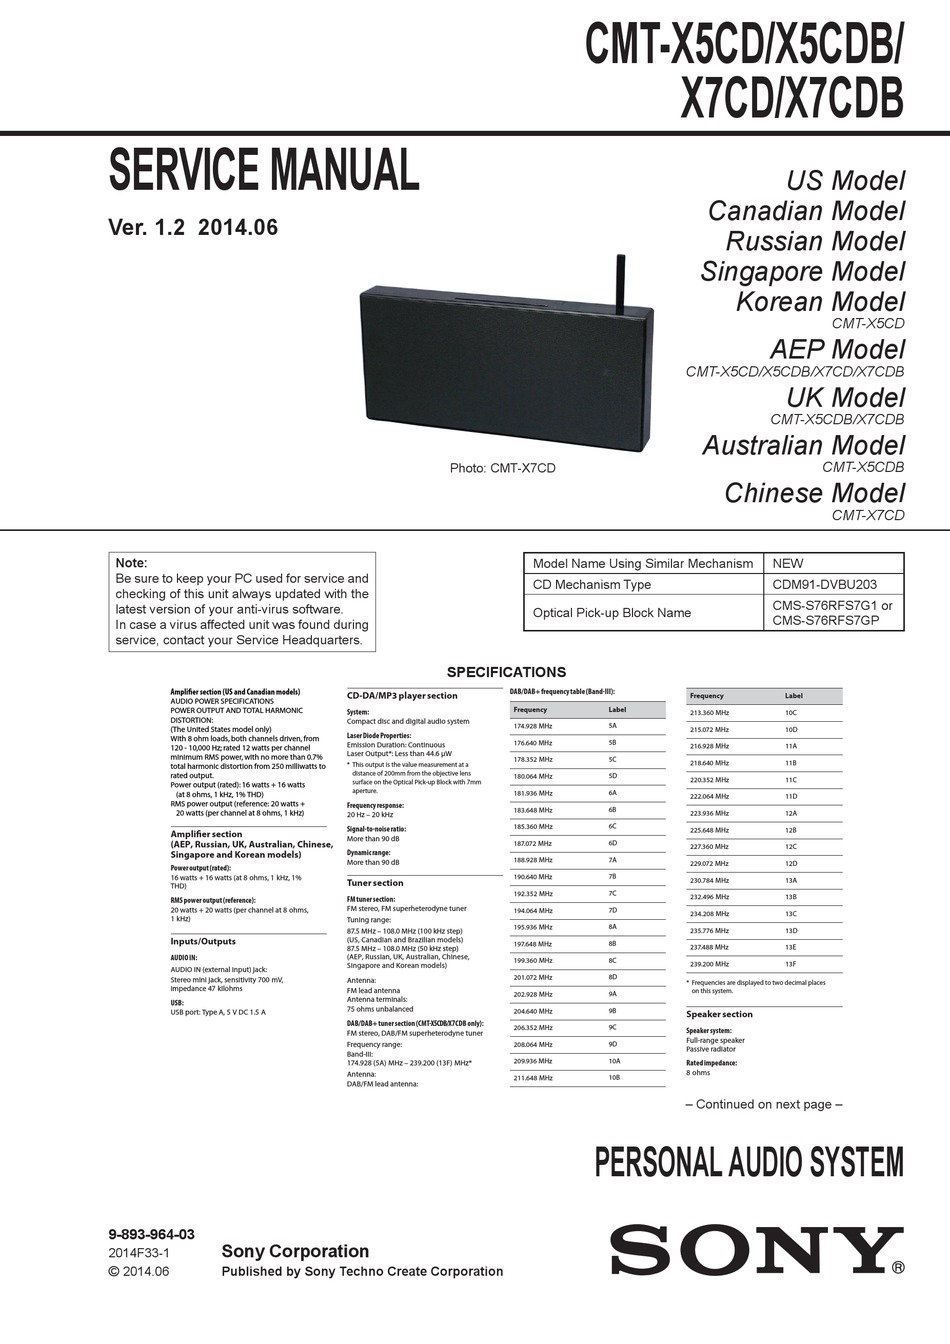 SONY CMT-X5CD SERVICE MANUAL Pdf Download | ManualsLib